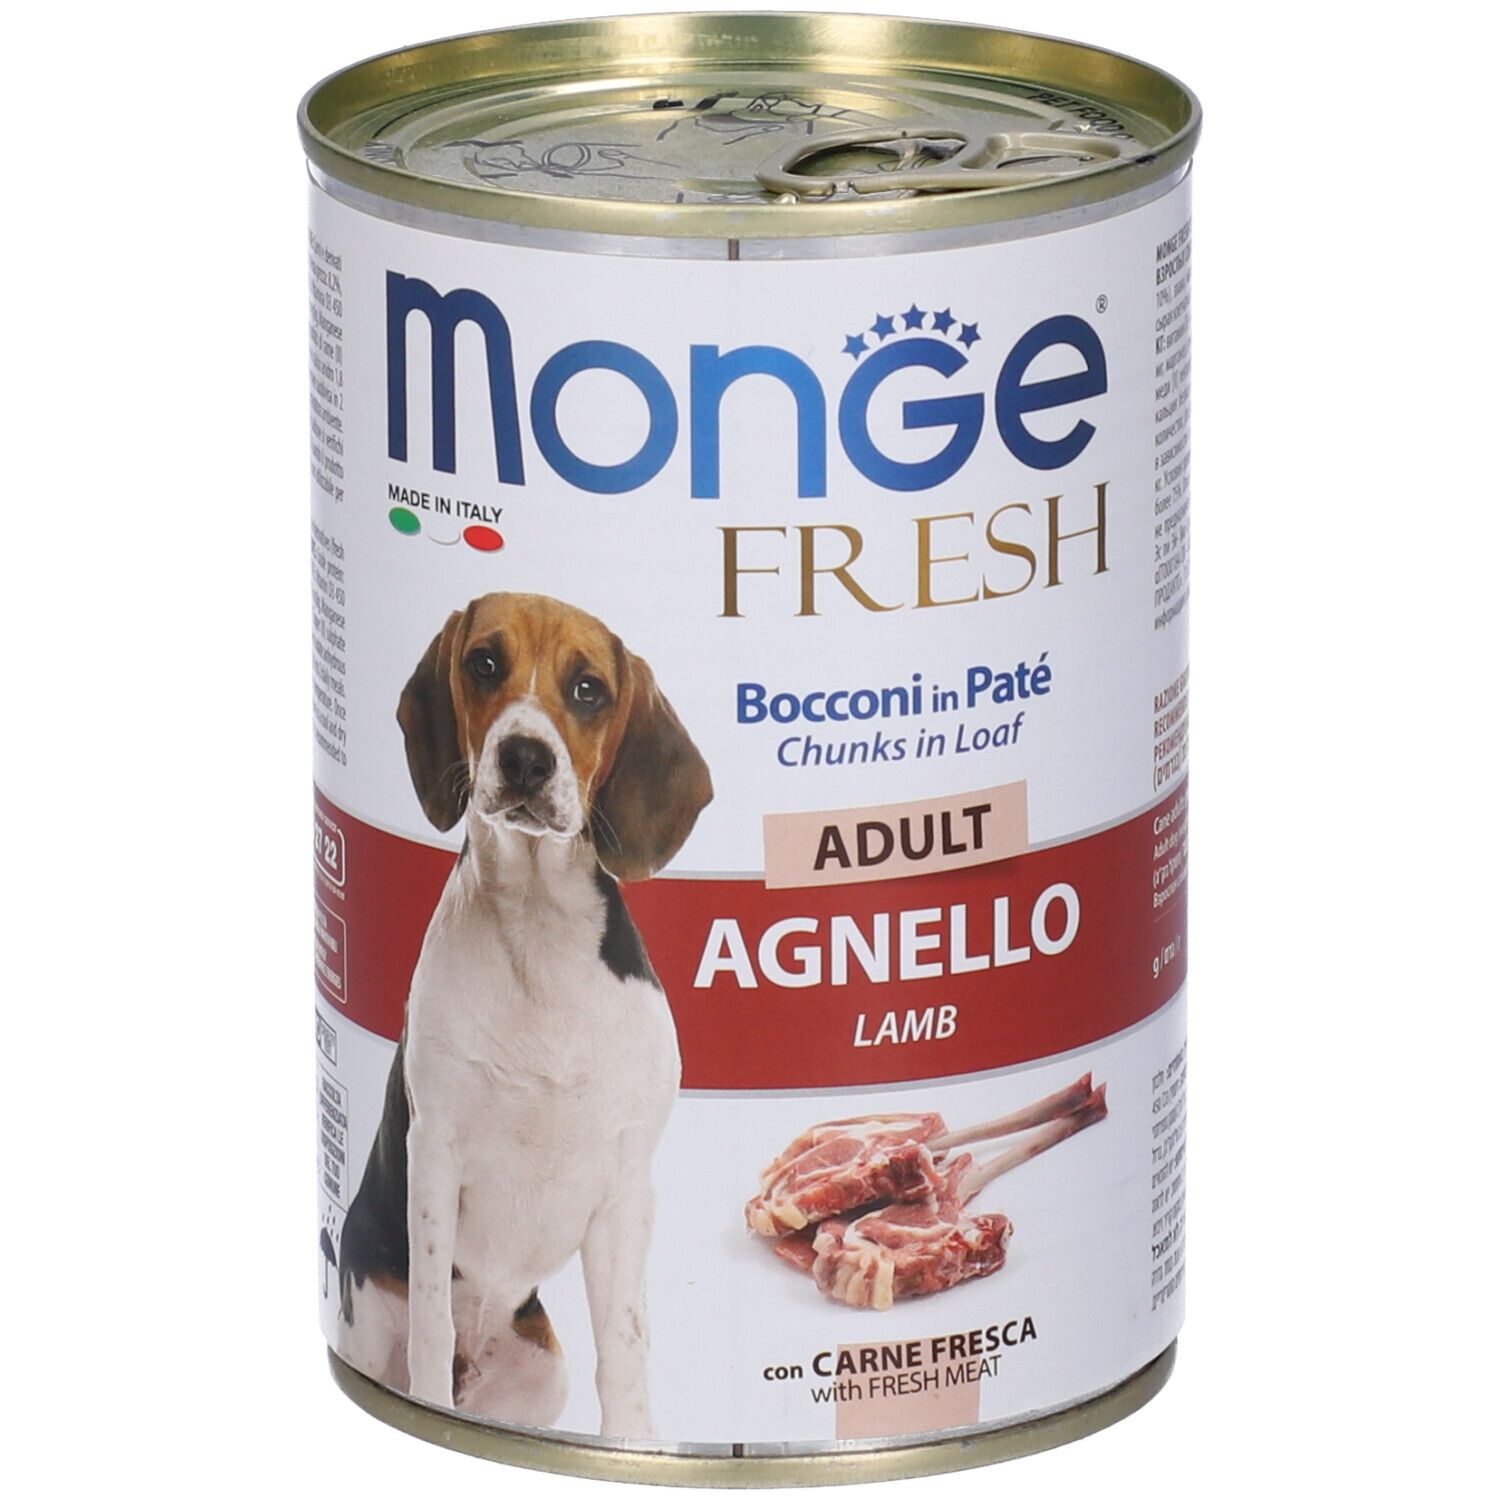 Monge Fresh Adult Agnello Bocconi In Paté